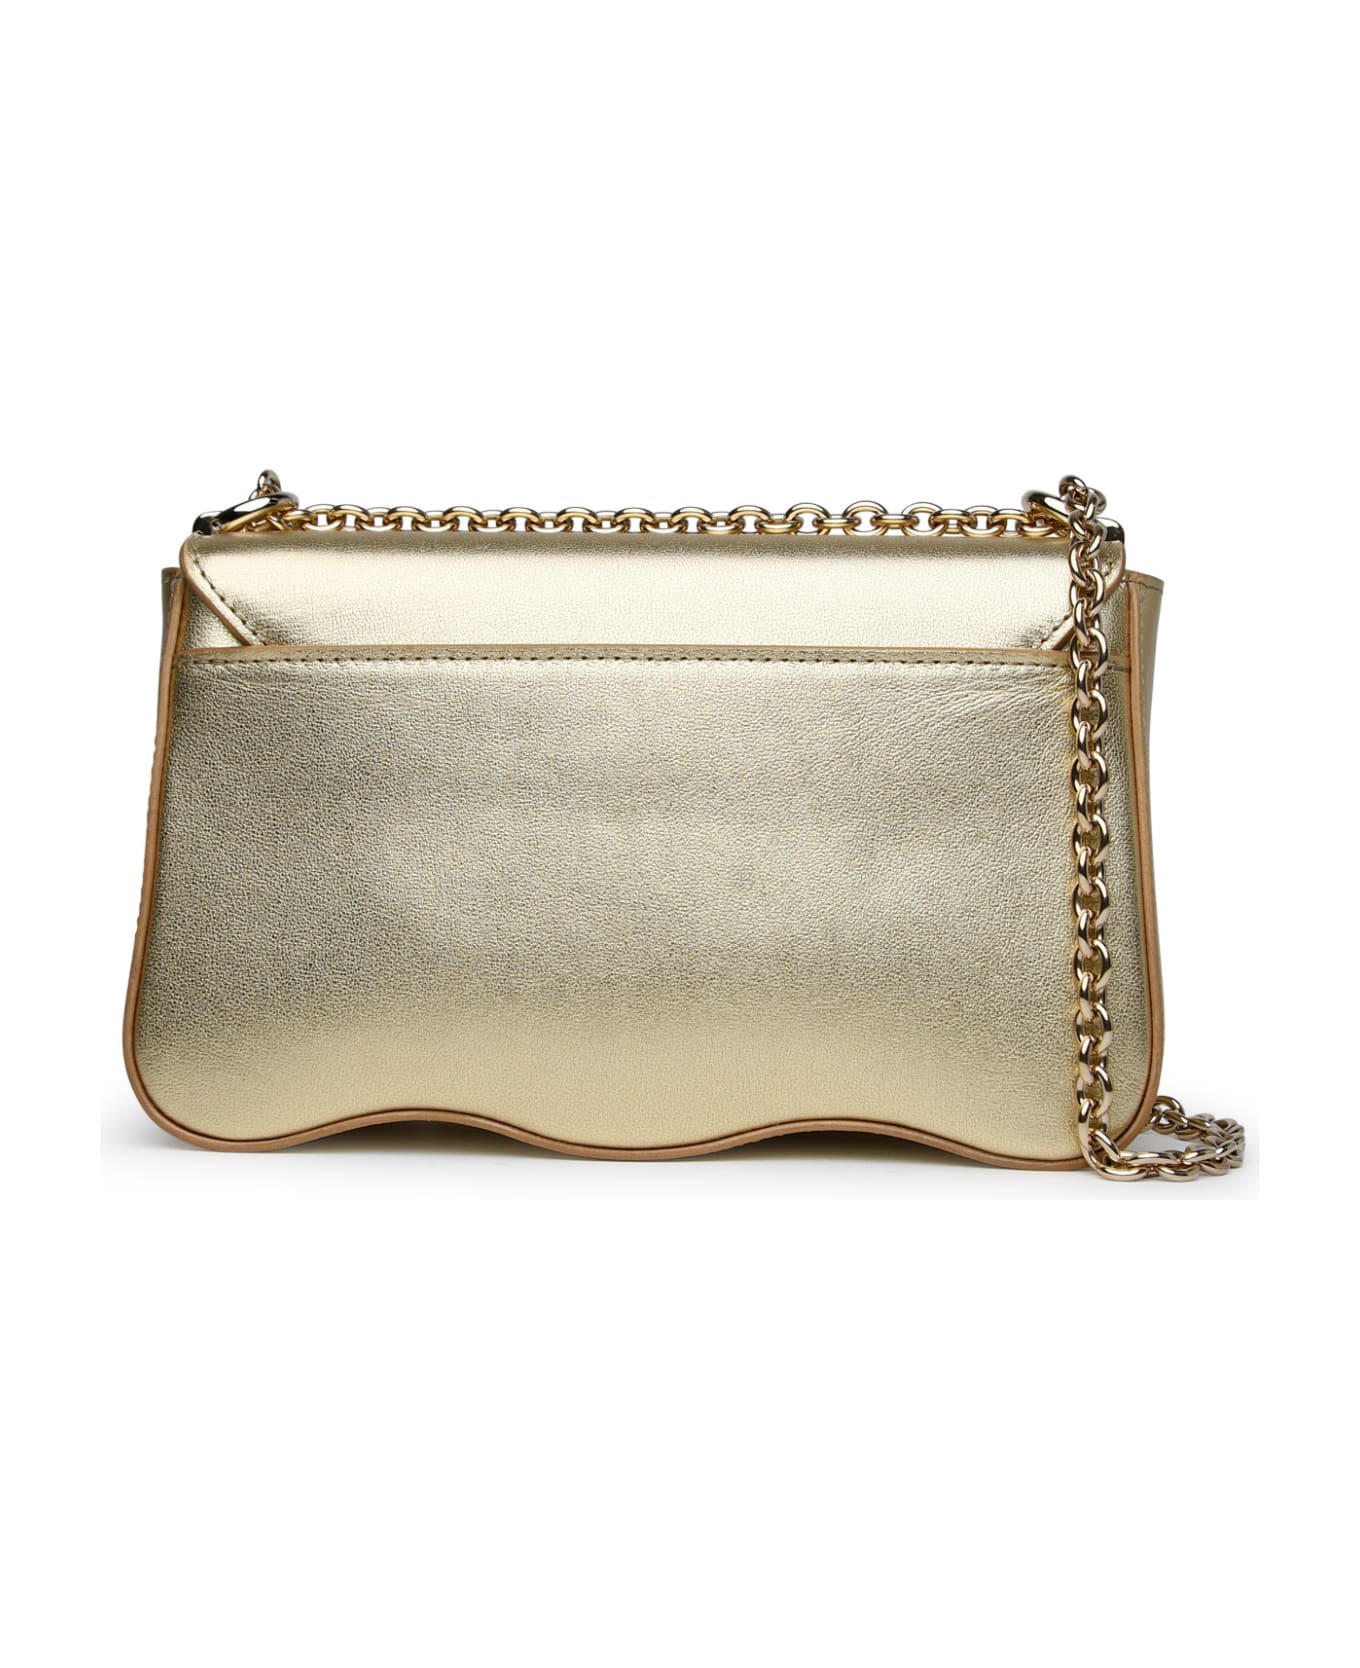 Furla 'furla 1927' Gold Calf Leather Bag - Gold ショルダーバッグ